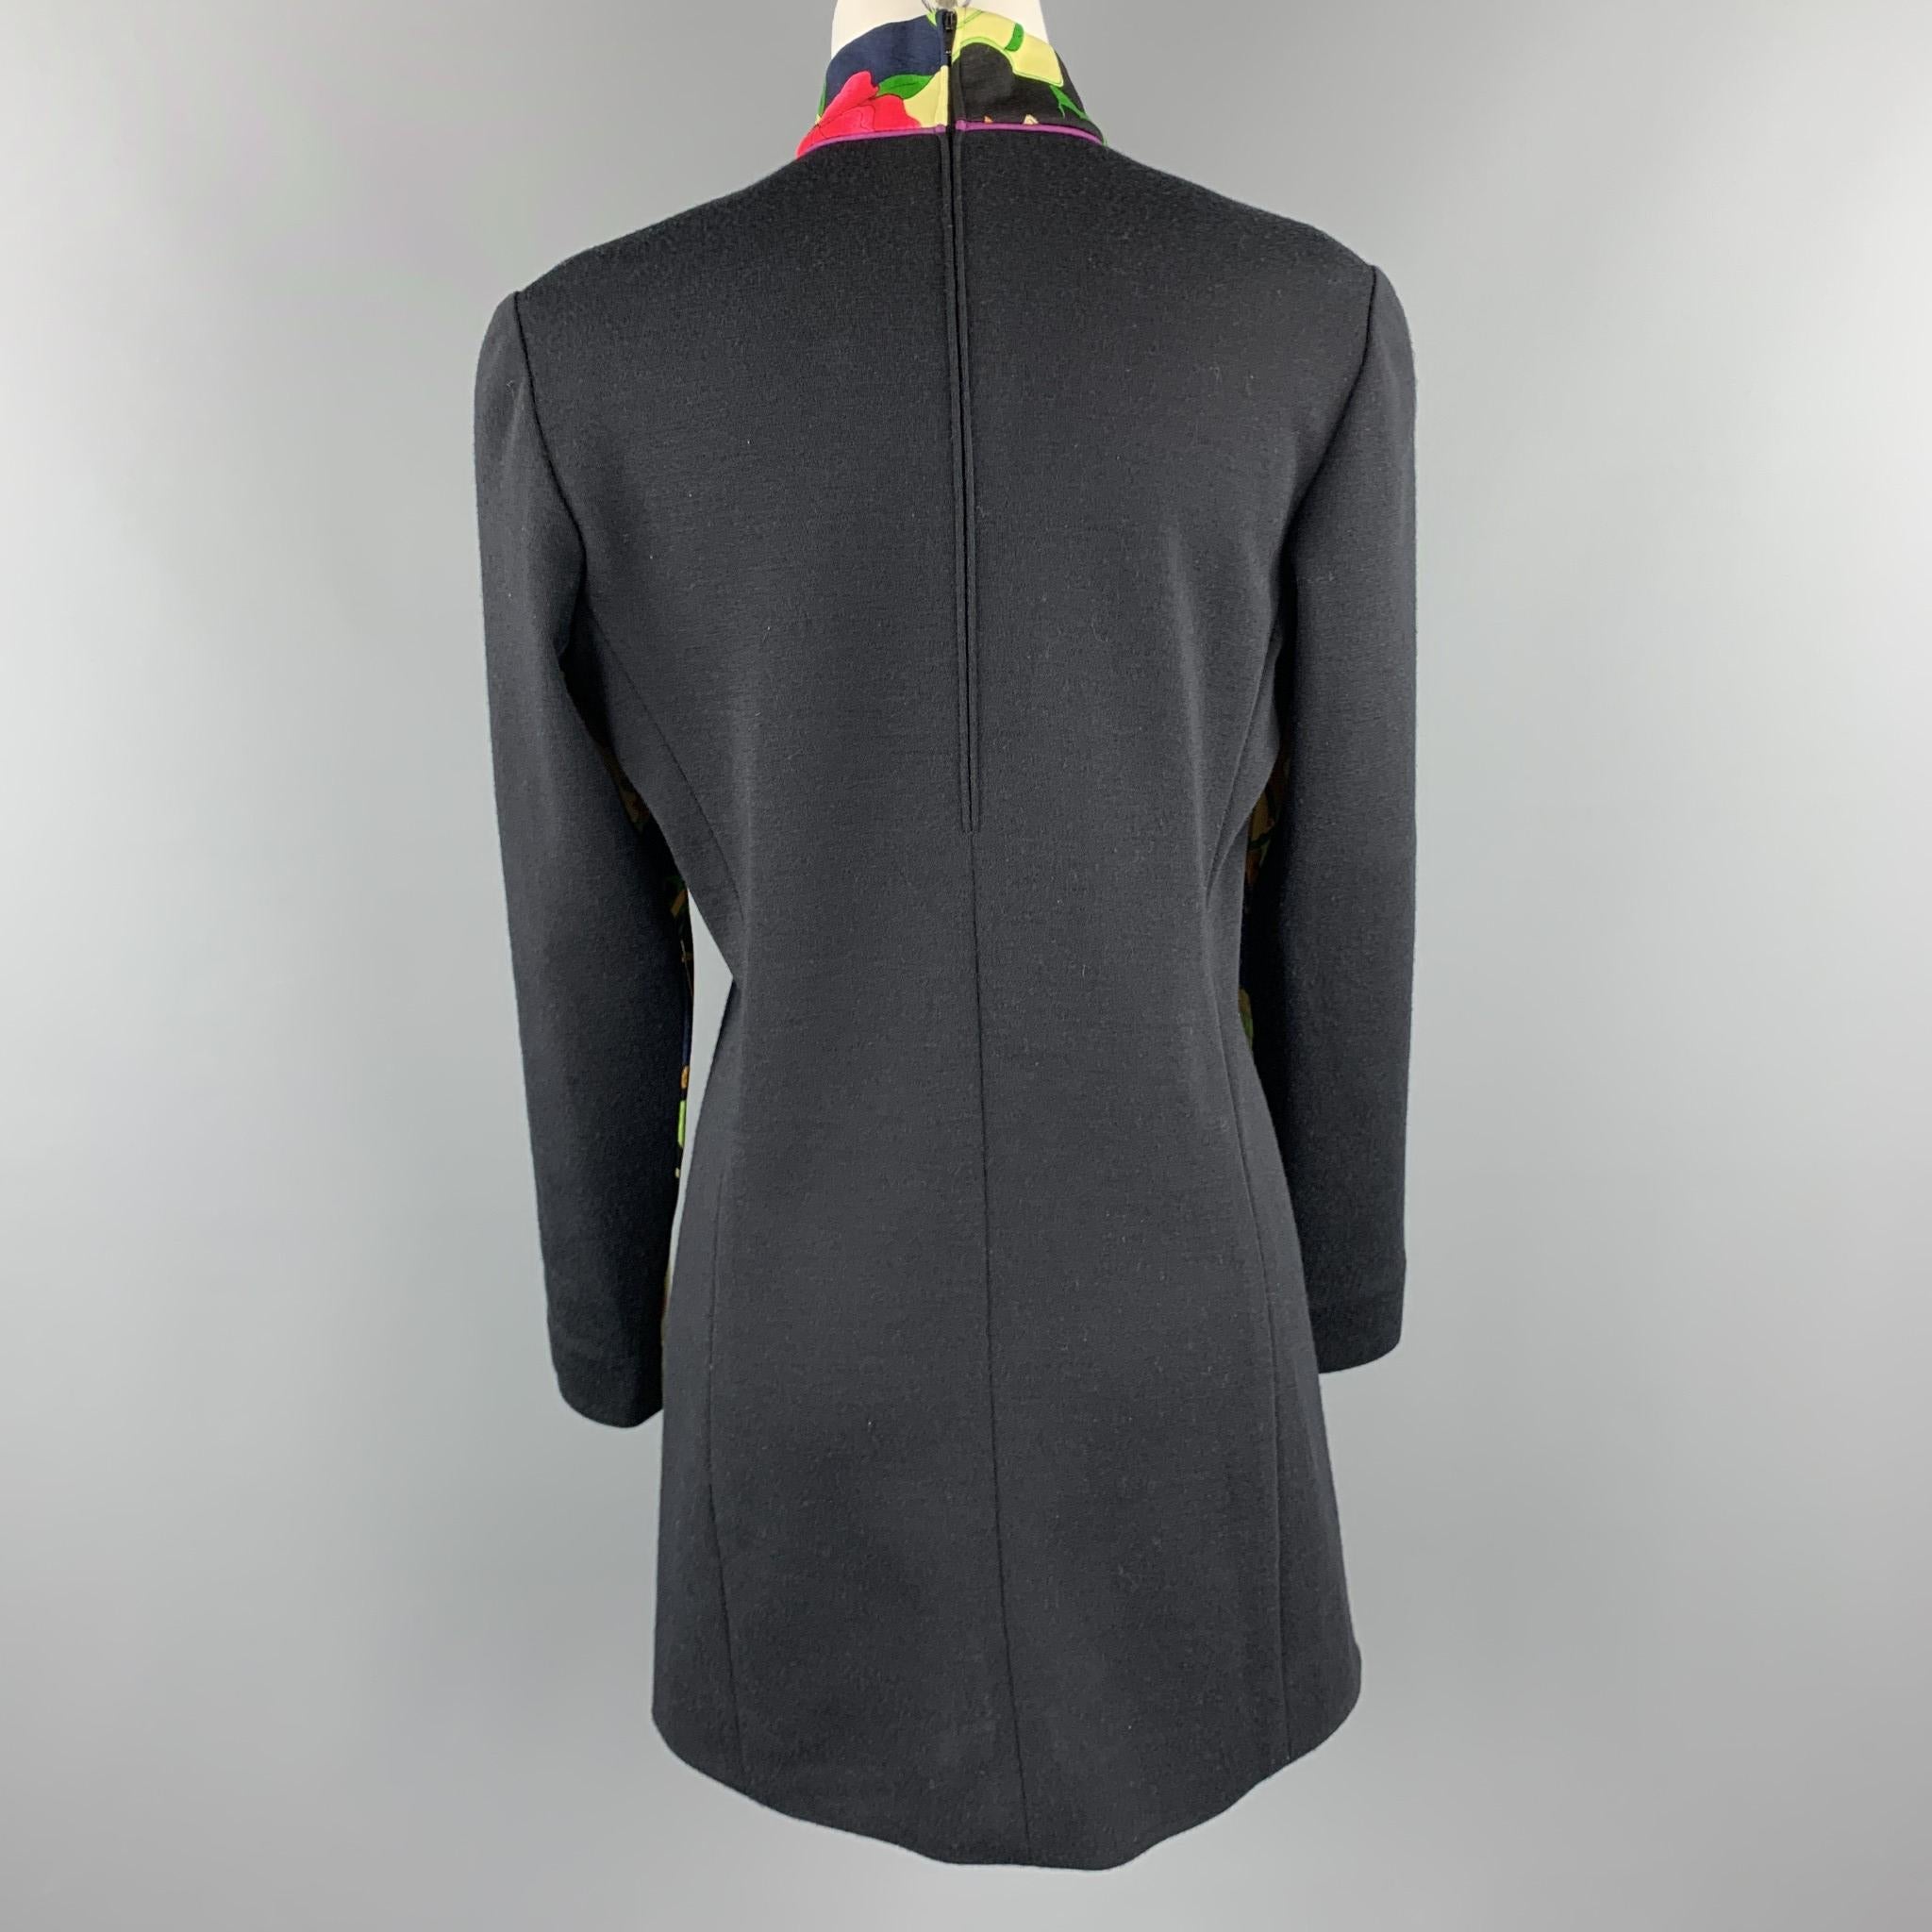 LEONARD PARIS Size 2 Black & Yellow Floral Print Wool Jersey Mock Neck Dress 1